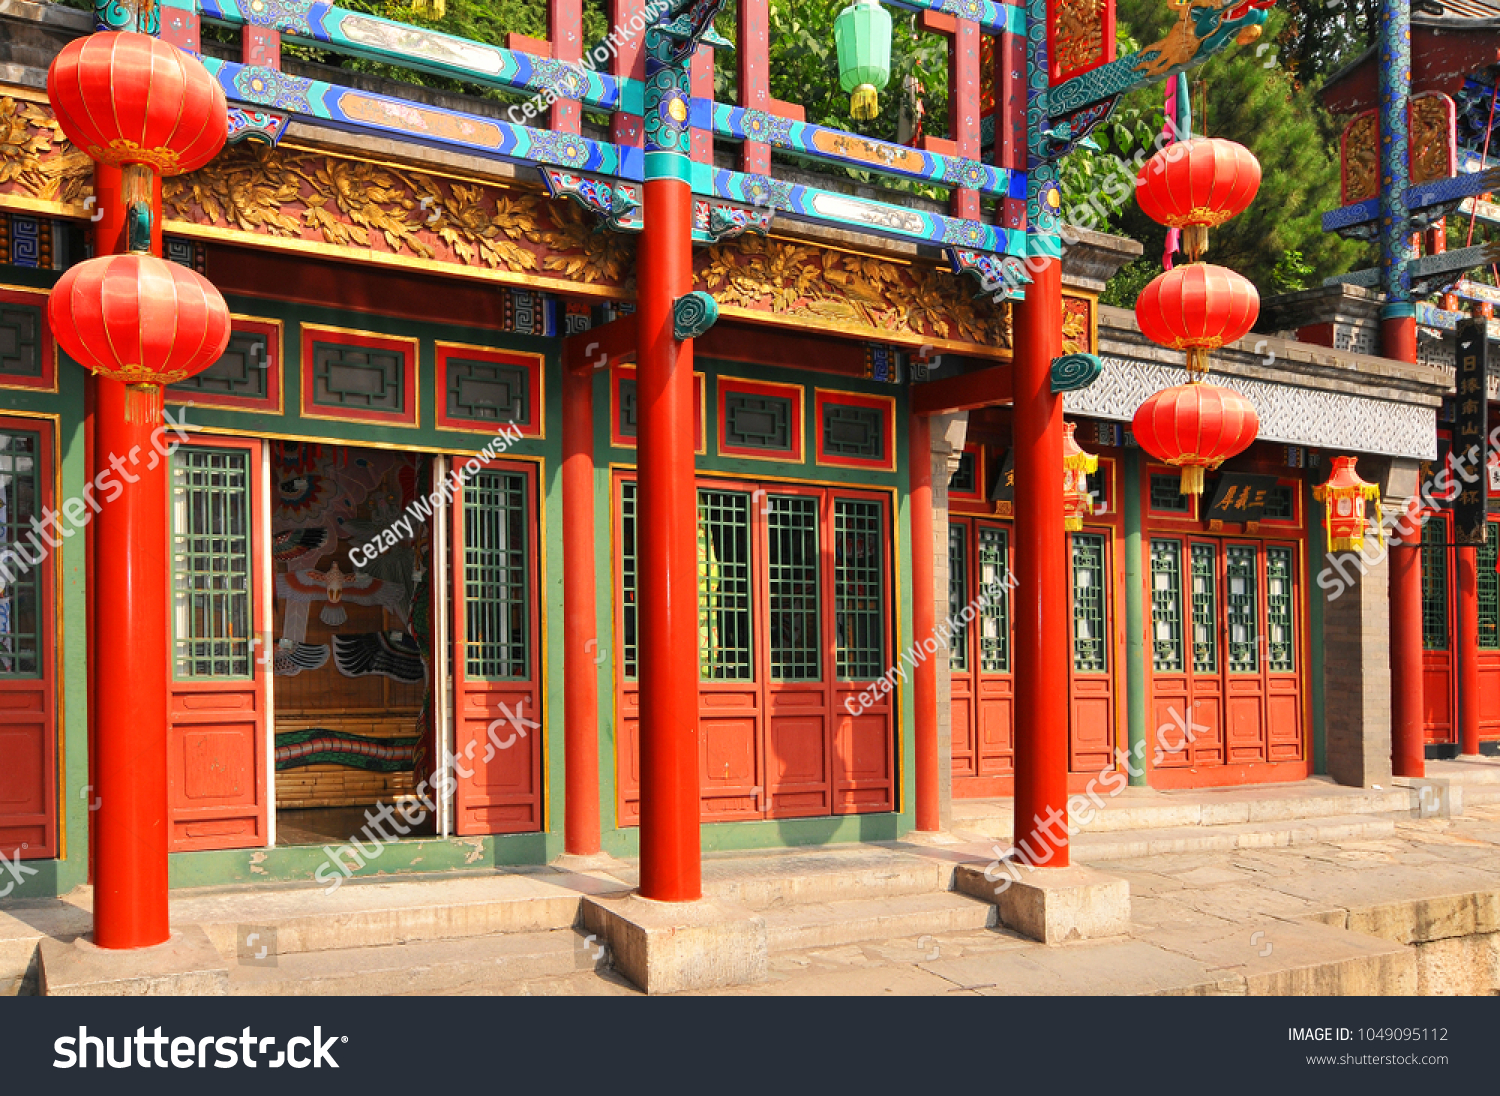 Suzhou Market Street in Summer Palace, Beijing, China. #1049095112